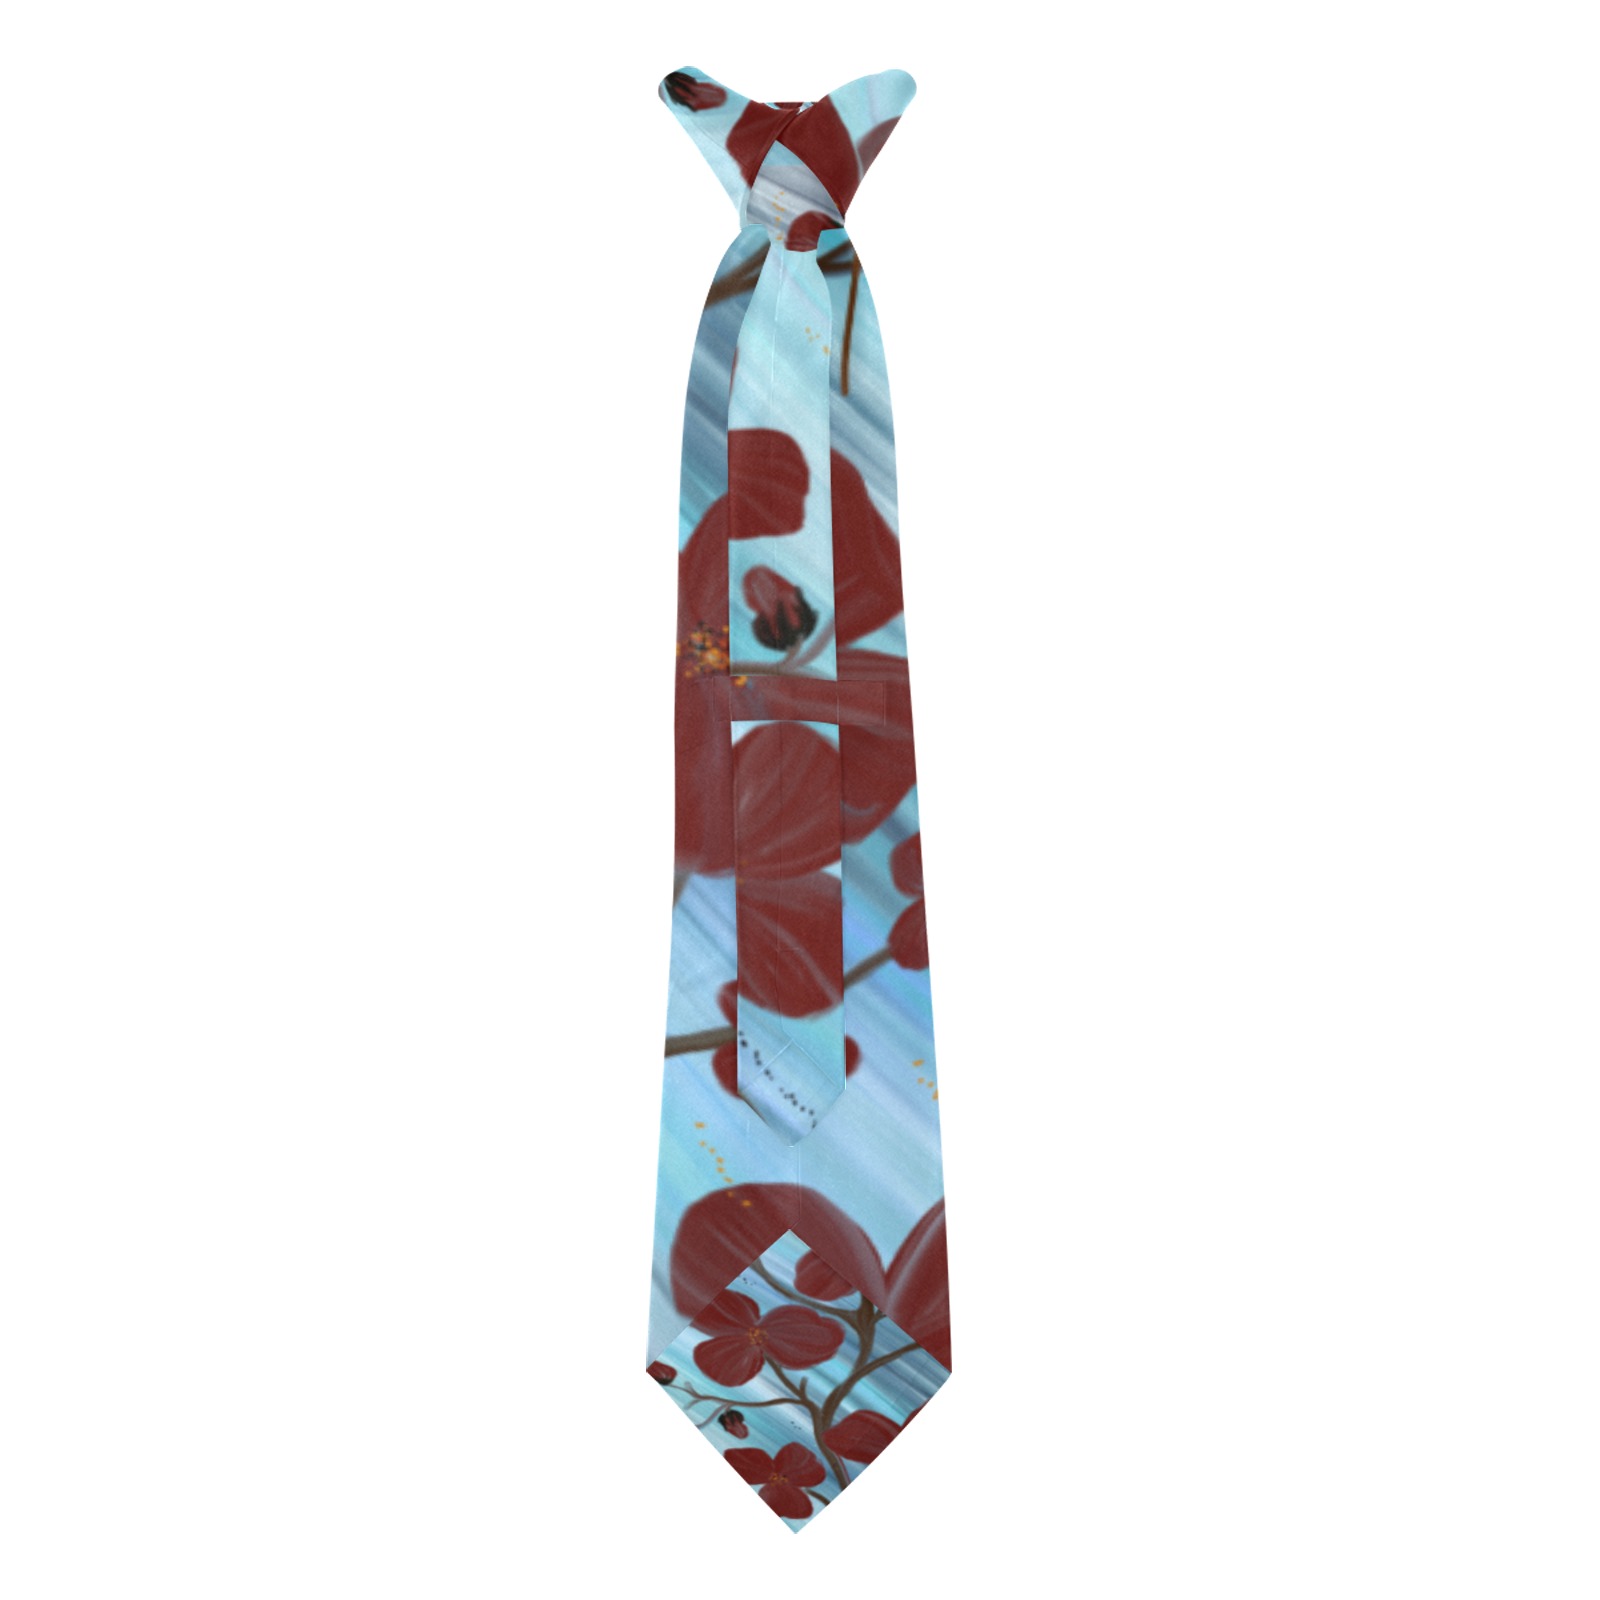 Blossom Custom Peekaboo Tie with Hidden Picture